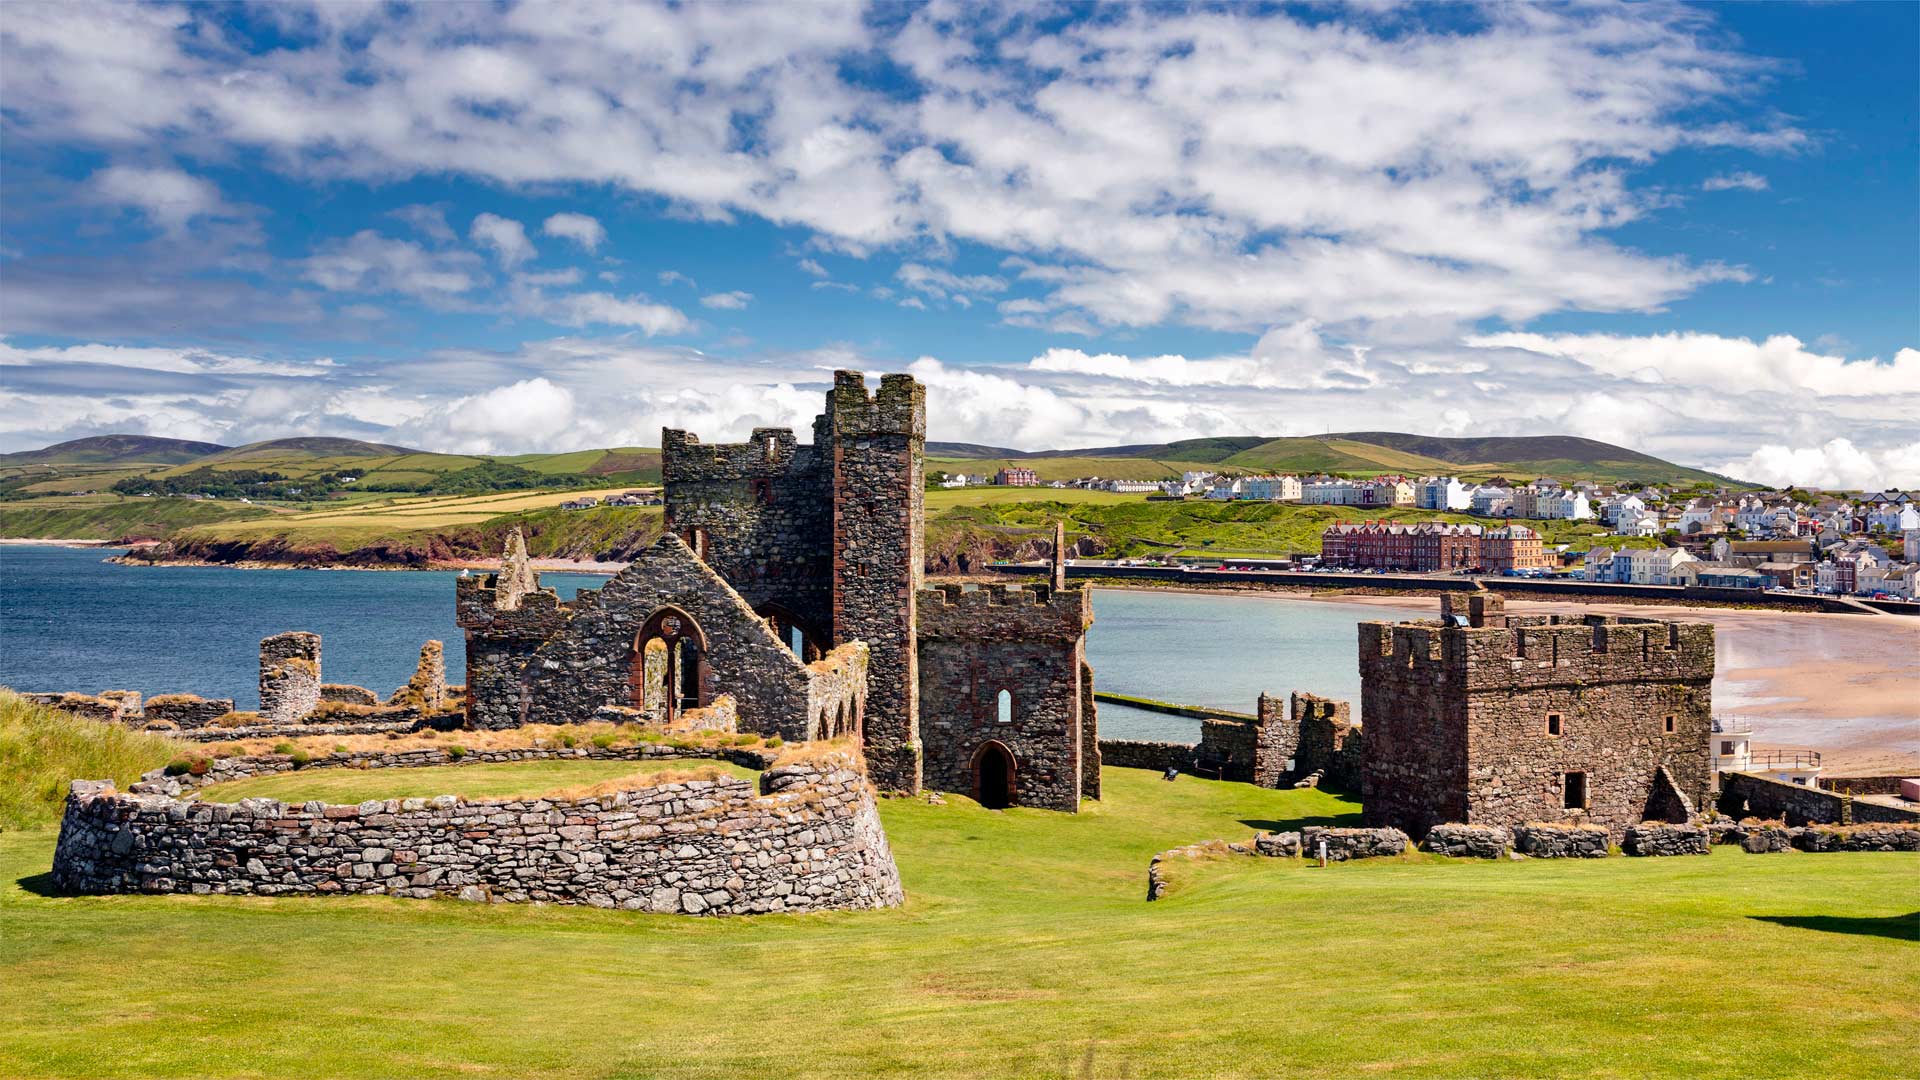 Peel Castle on St. Patrick's Isle with the Isle of Man